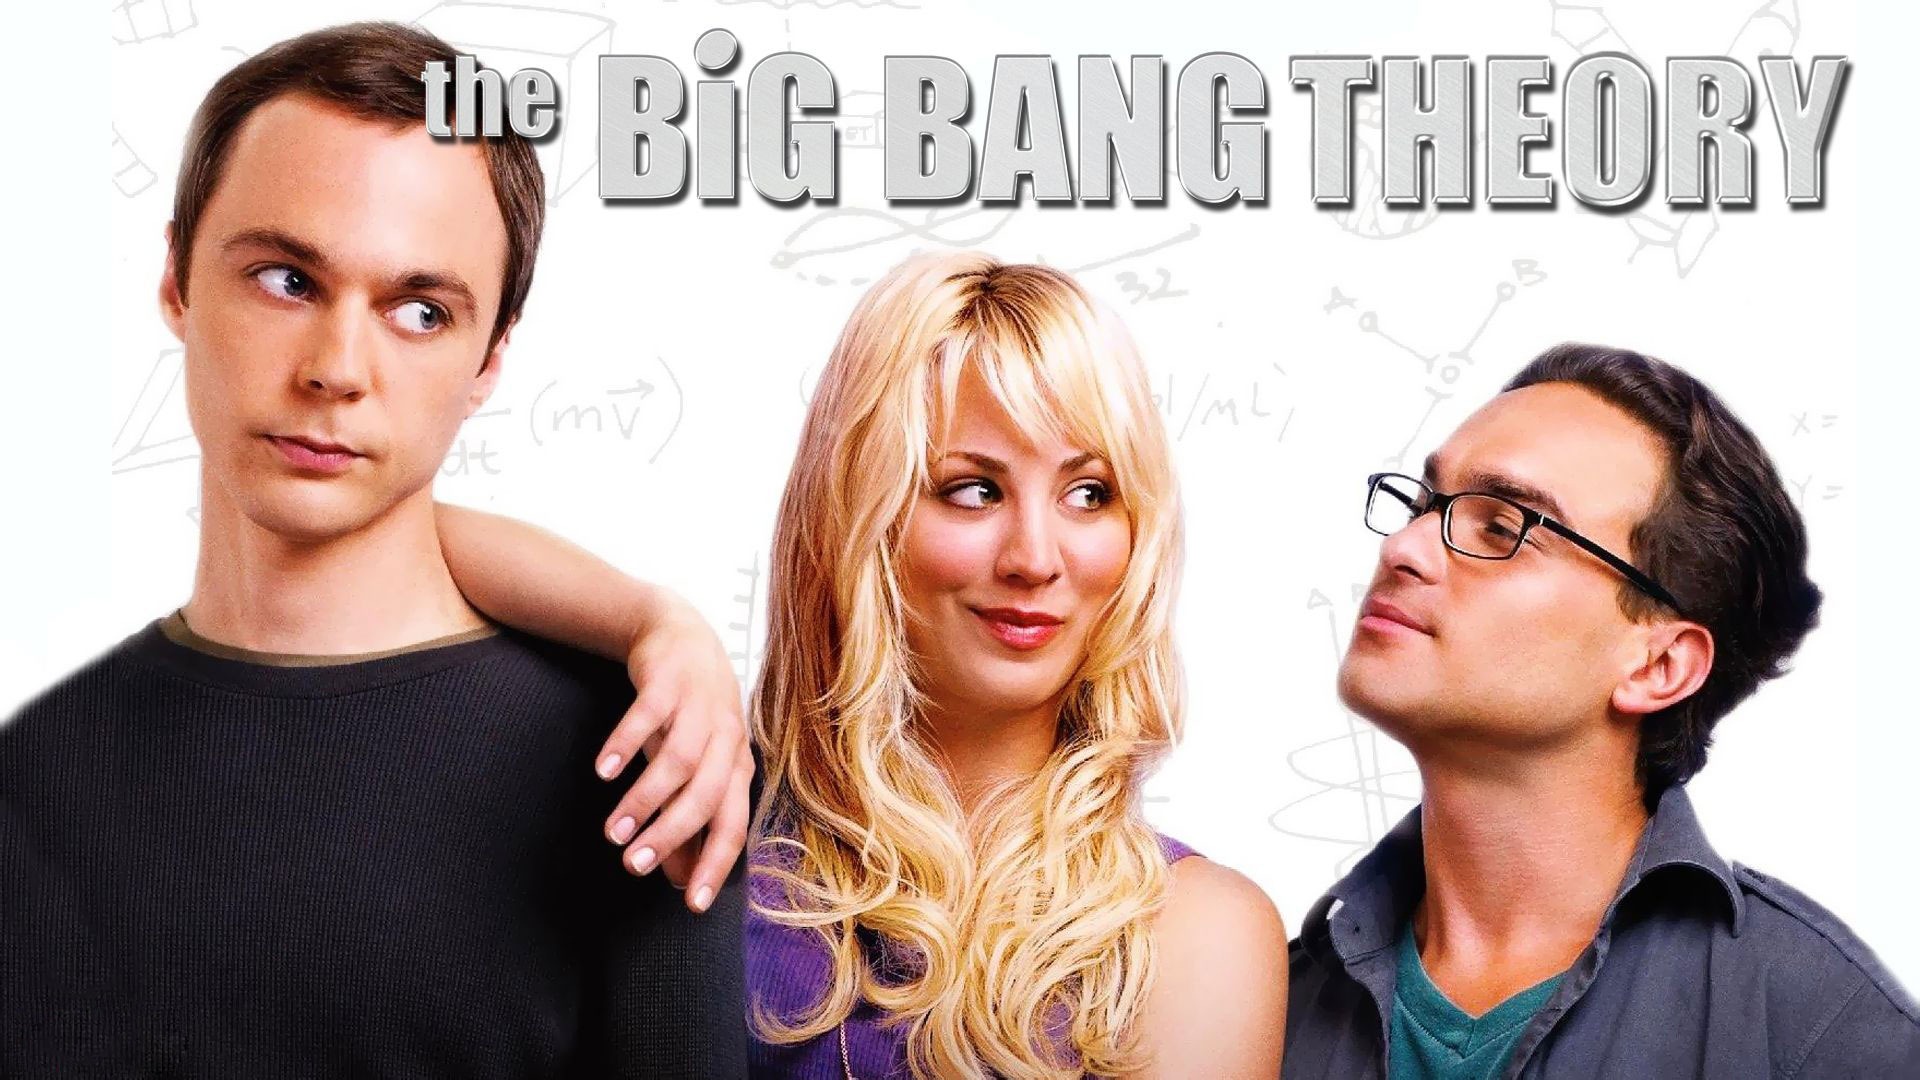 The Big Bang Theory ビッグバン理論TVシリーズHDの壁紙 #21 - 1920x1080